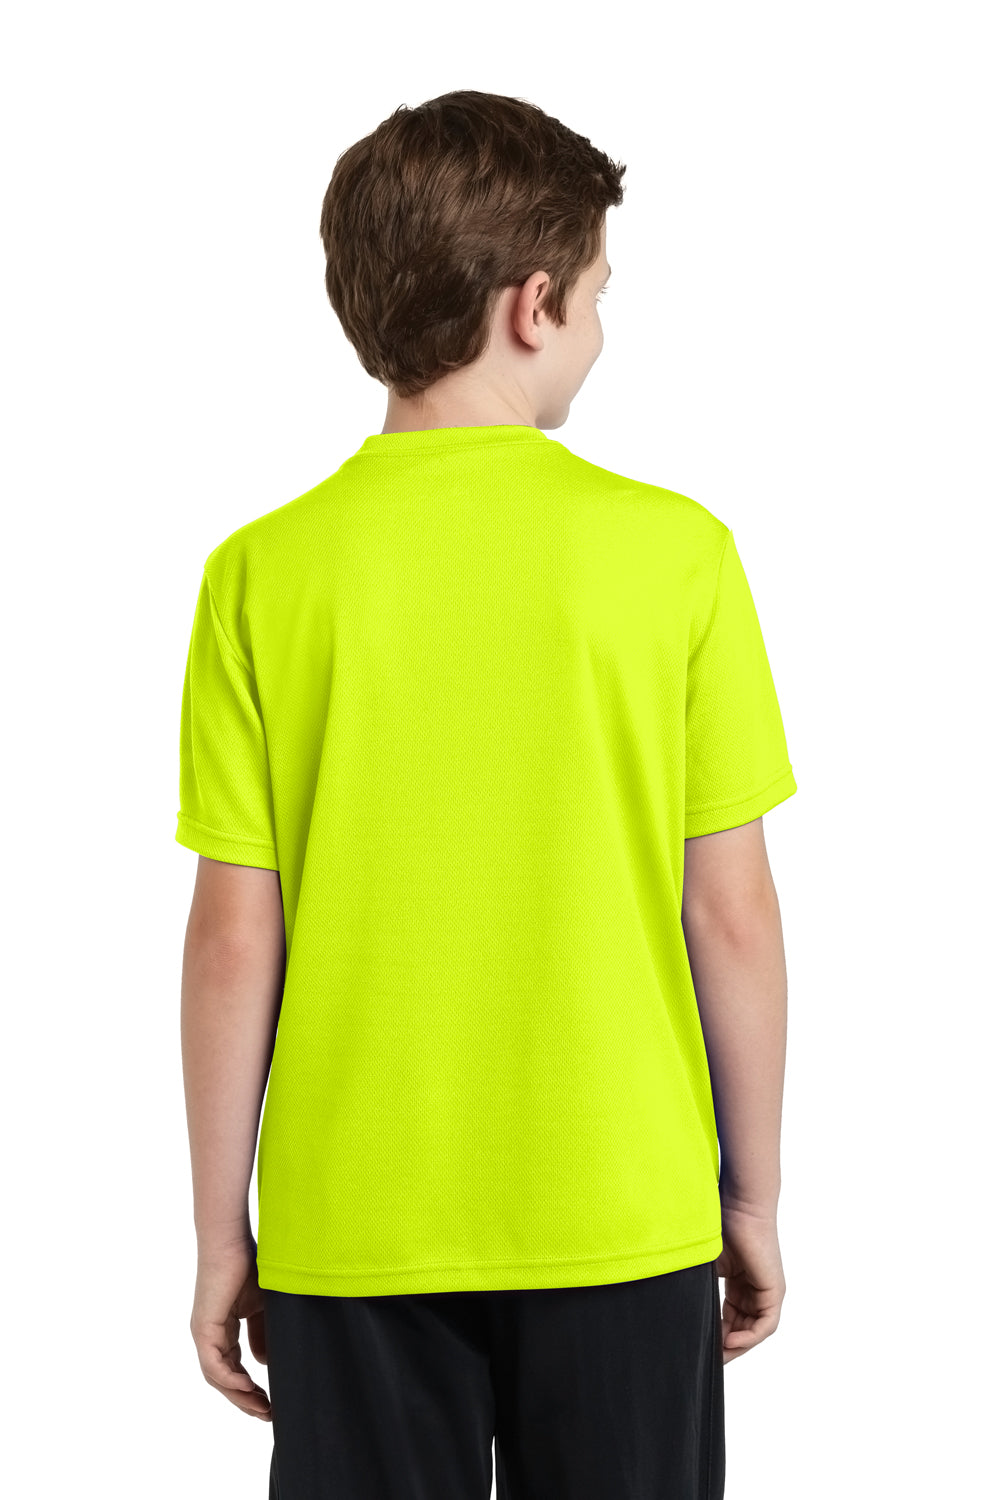 Sport-Tek YST340 Youth RacerMesh Moisture Wicking Short Sleeve Crewneck T-Shirt Neon Yellow Back